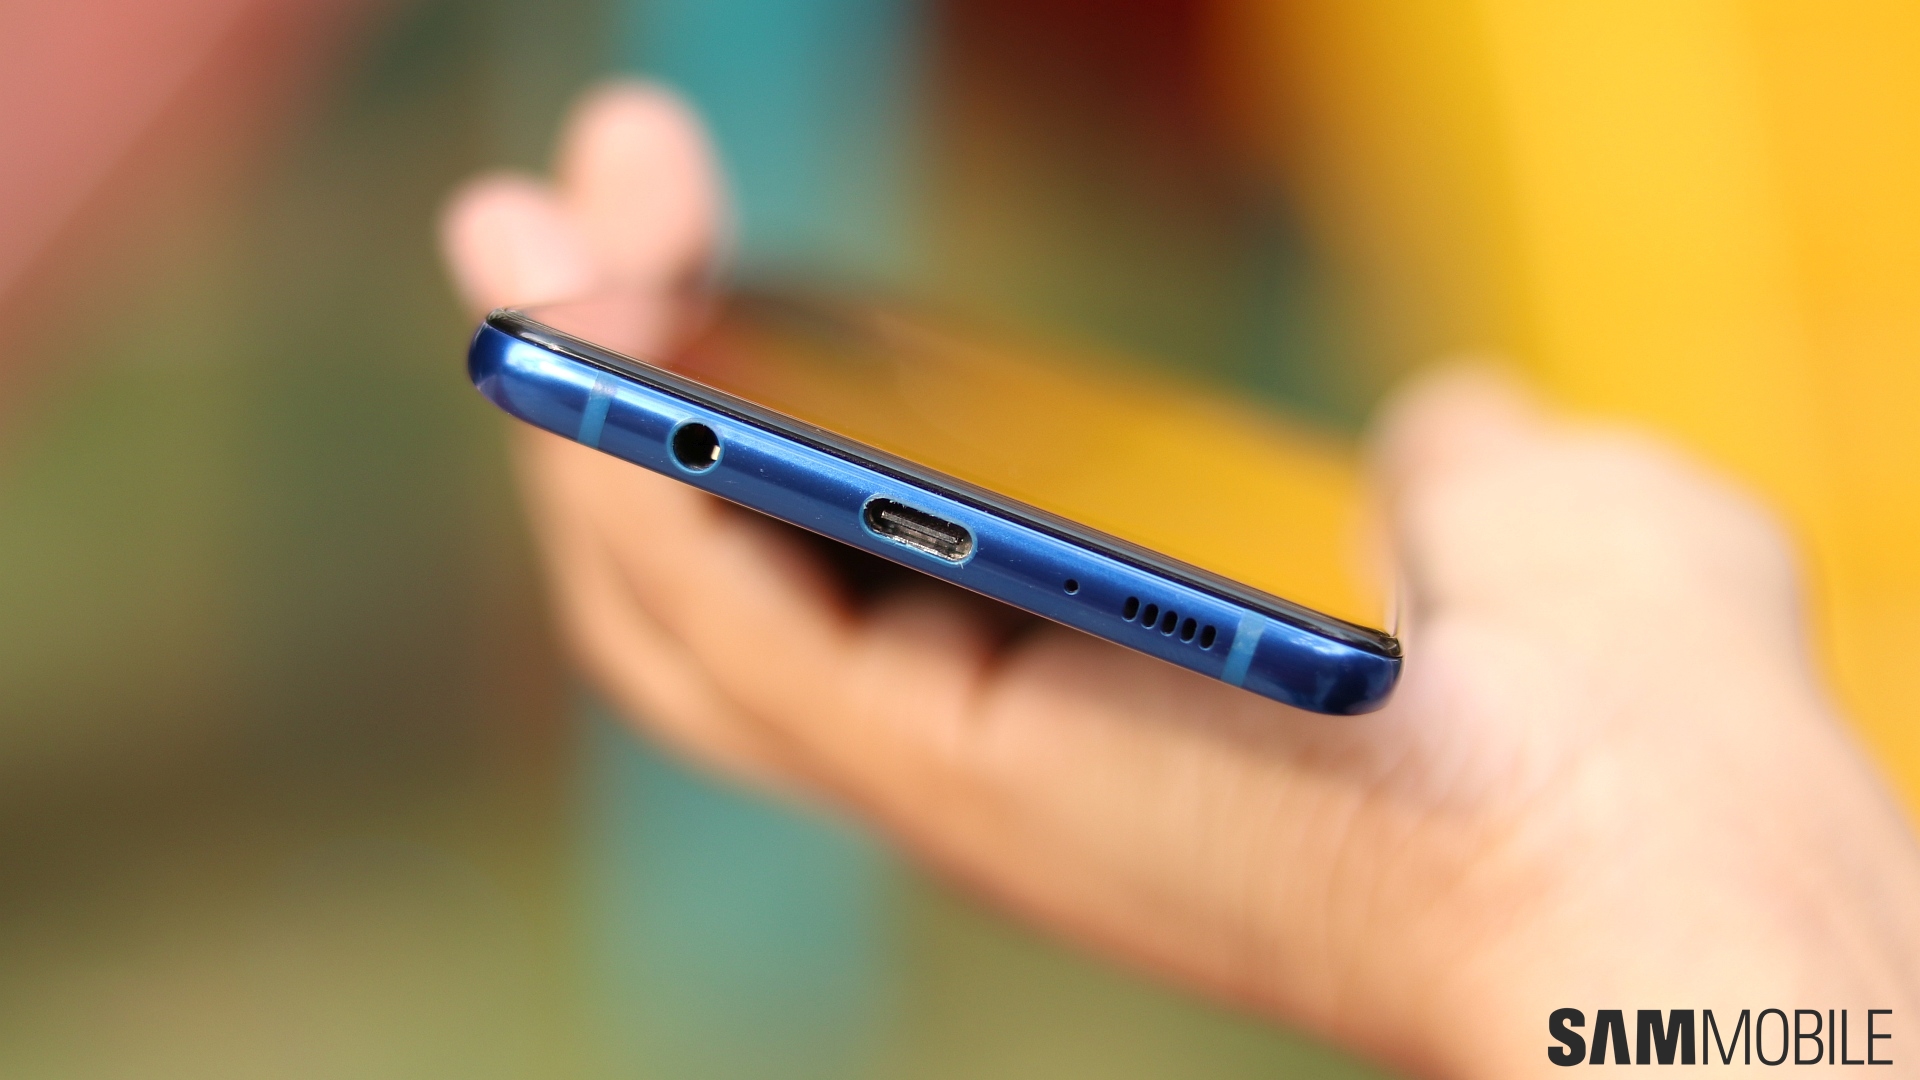 Samsung Galaxy A9 (2018) Smartphone Review -  Reviews